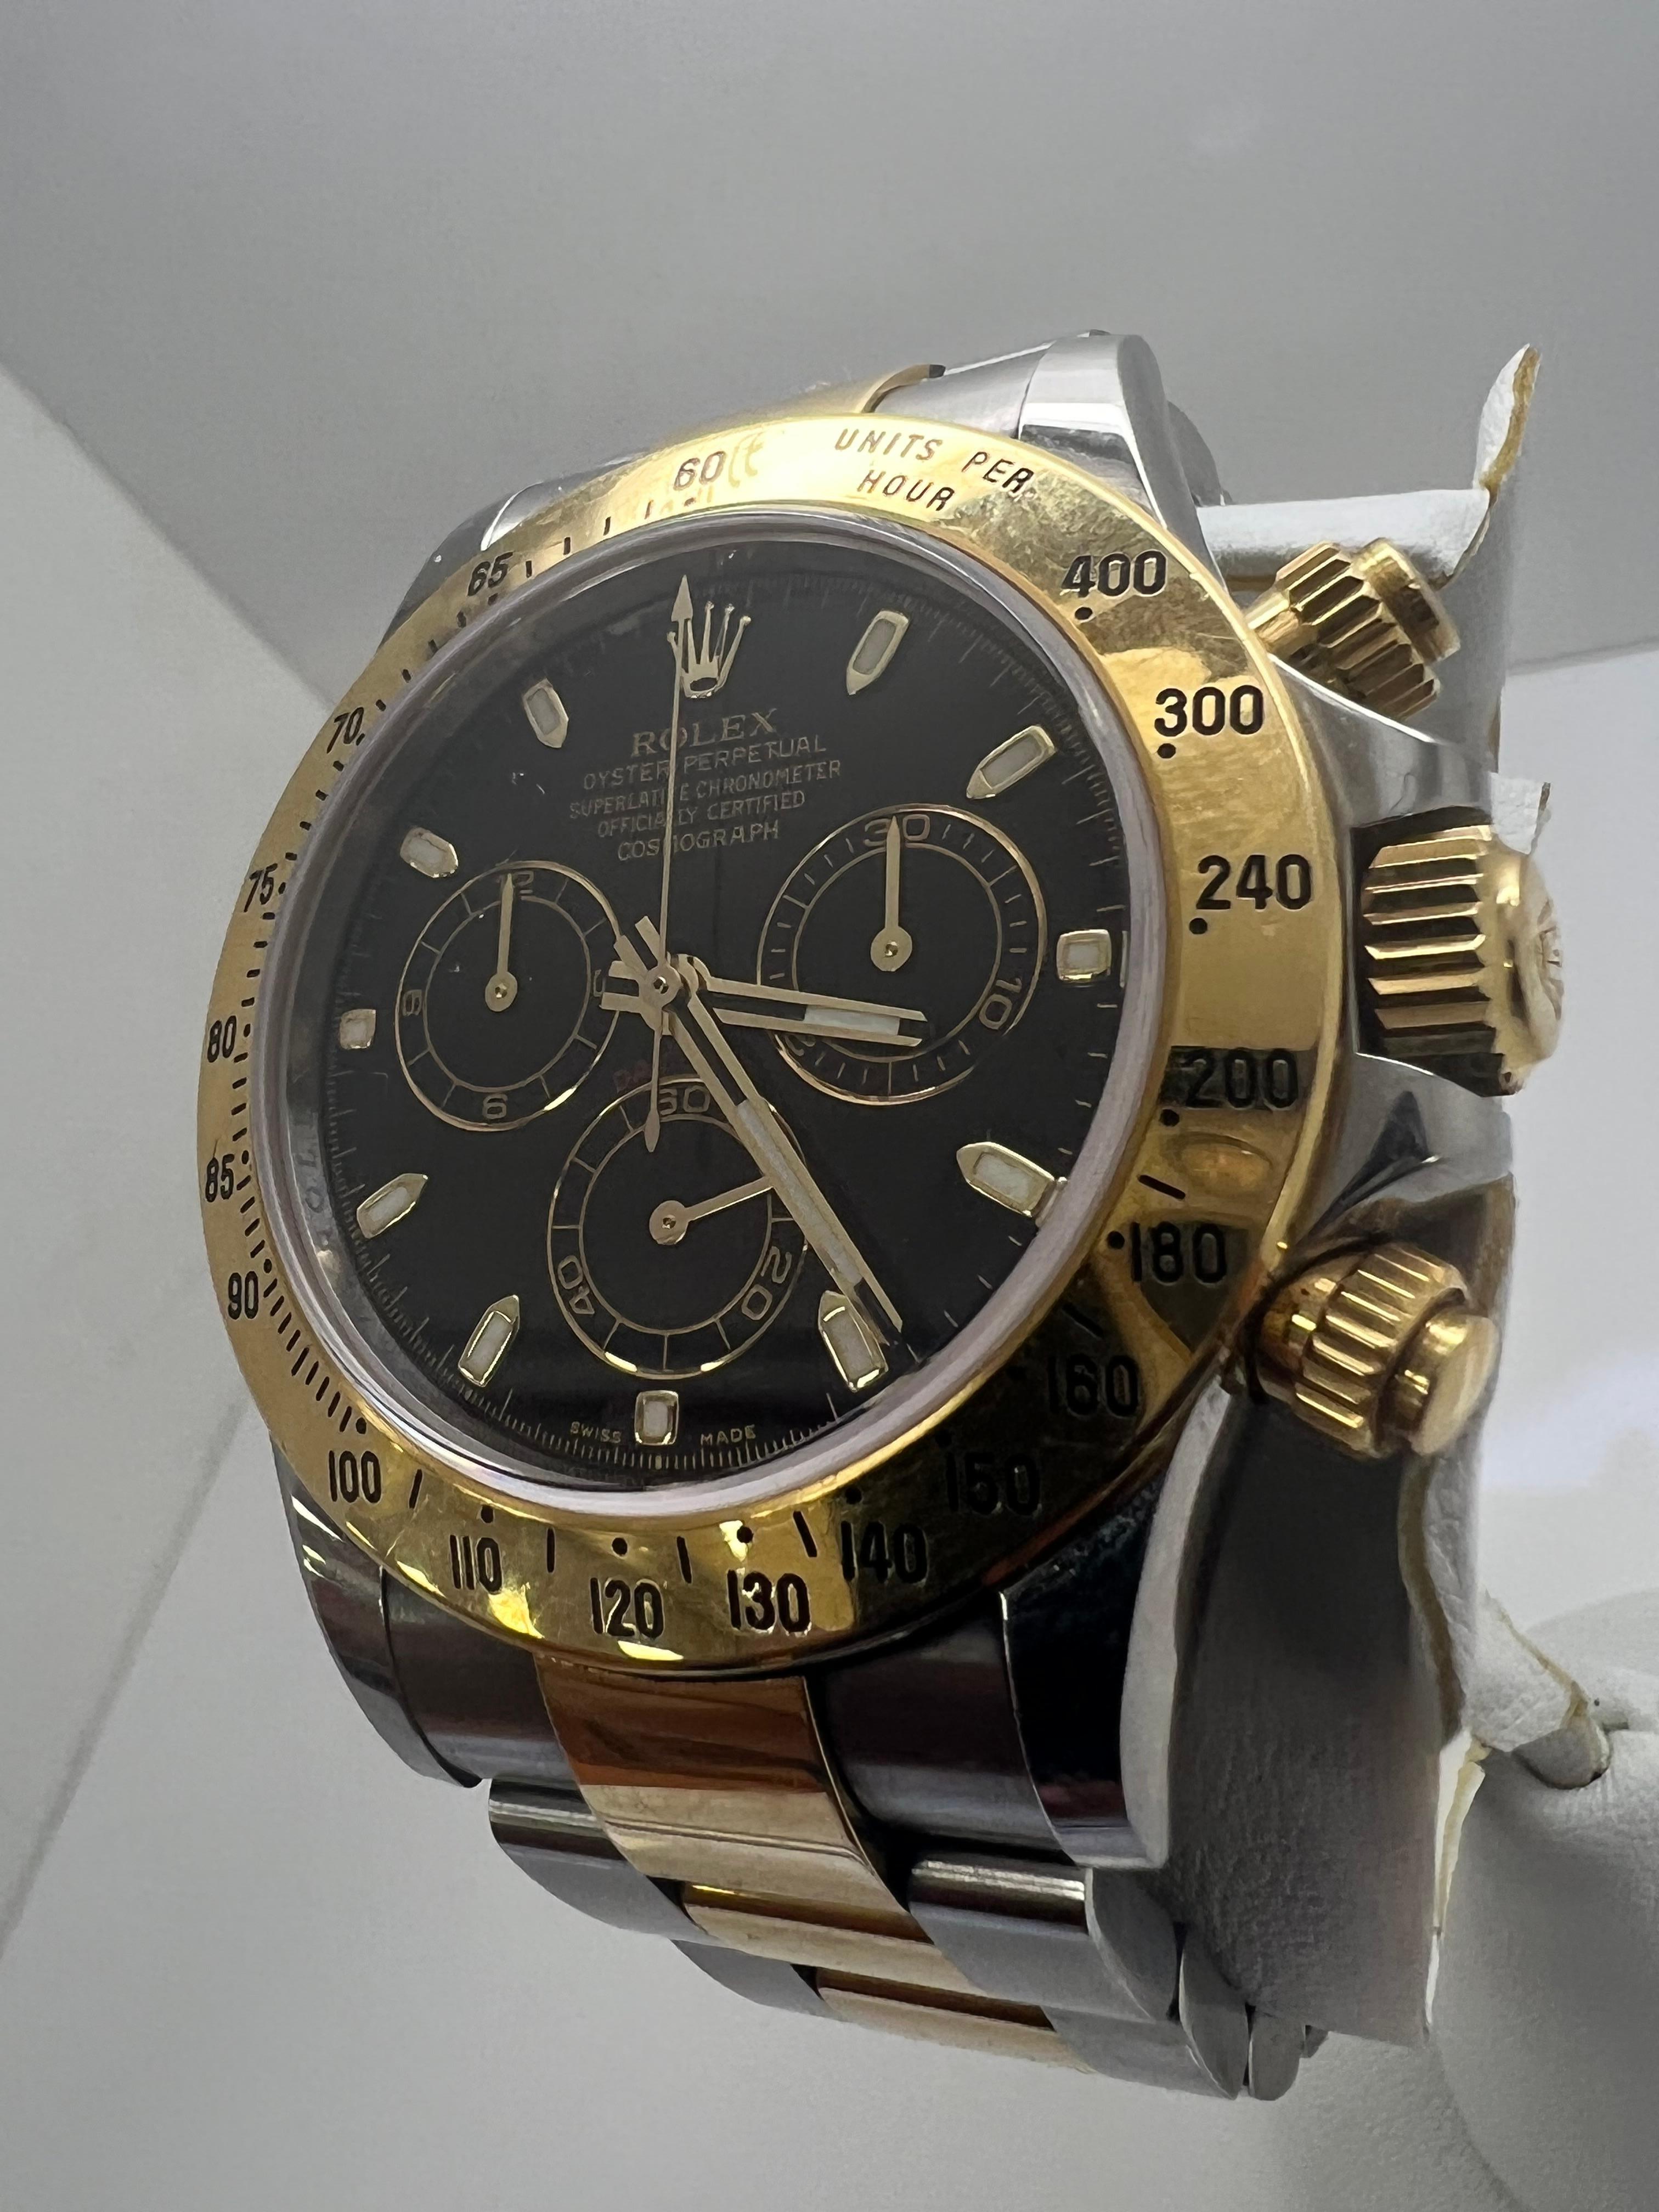 Rolex Daytona 2 Tone Black Dial Men’s Watch

excellent condition

This watch is 100% all original Rolex

Original Rolex Box & Booklets 

Shop With Confidence 

5 Year Warranty
